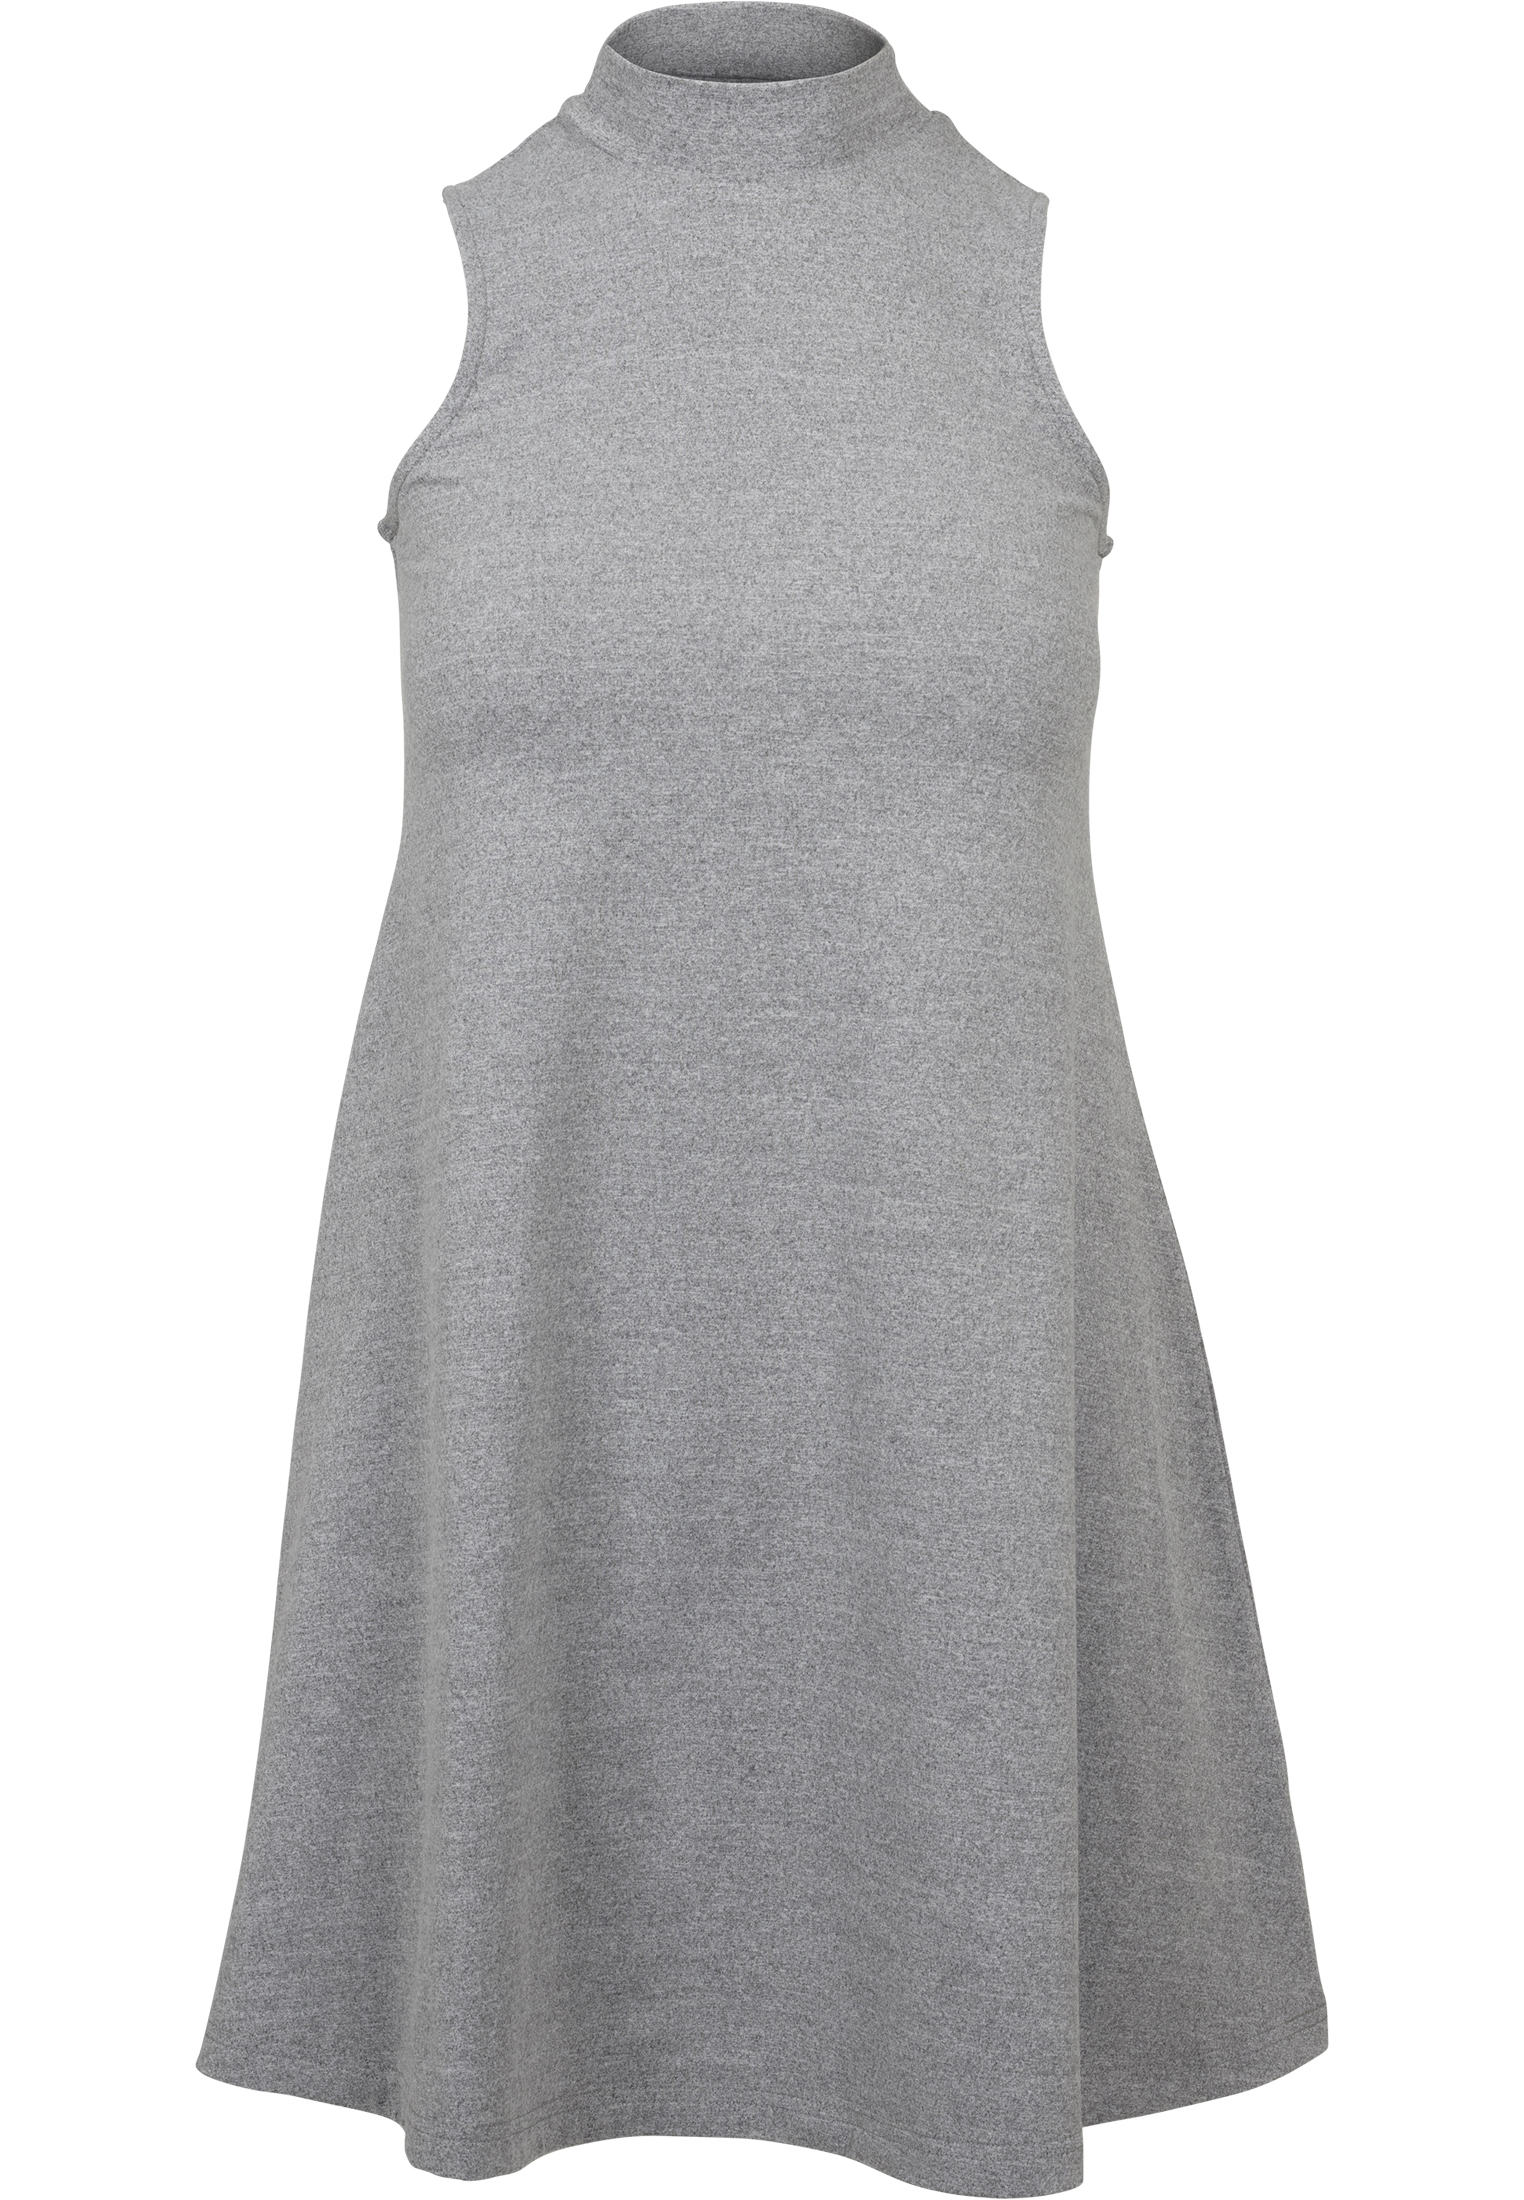 Curvy Ladies A-Line Turtleneck Dress in Farbe grey